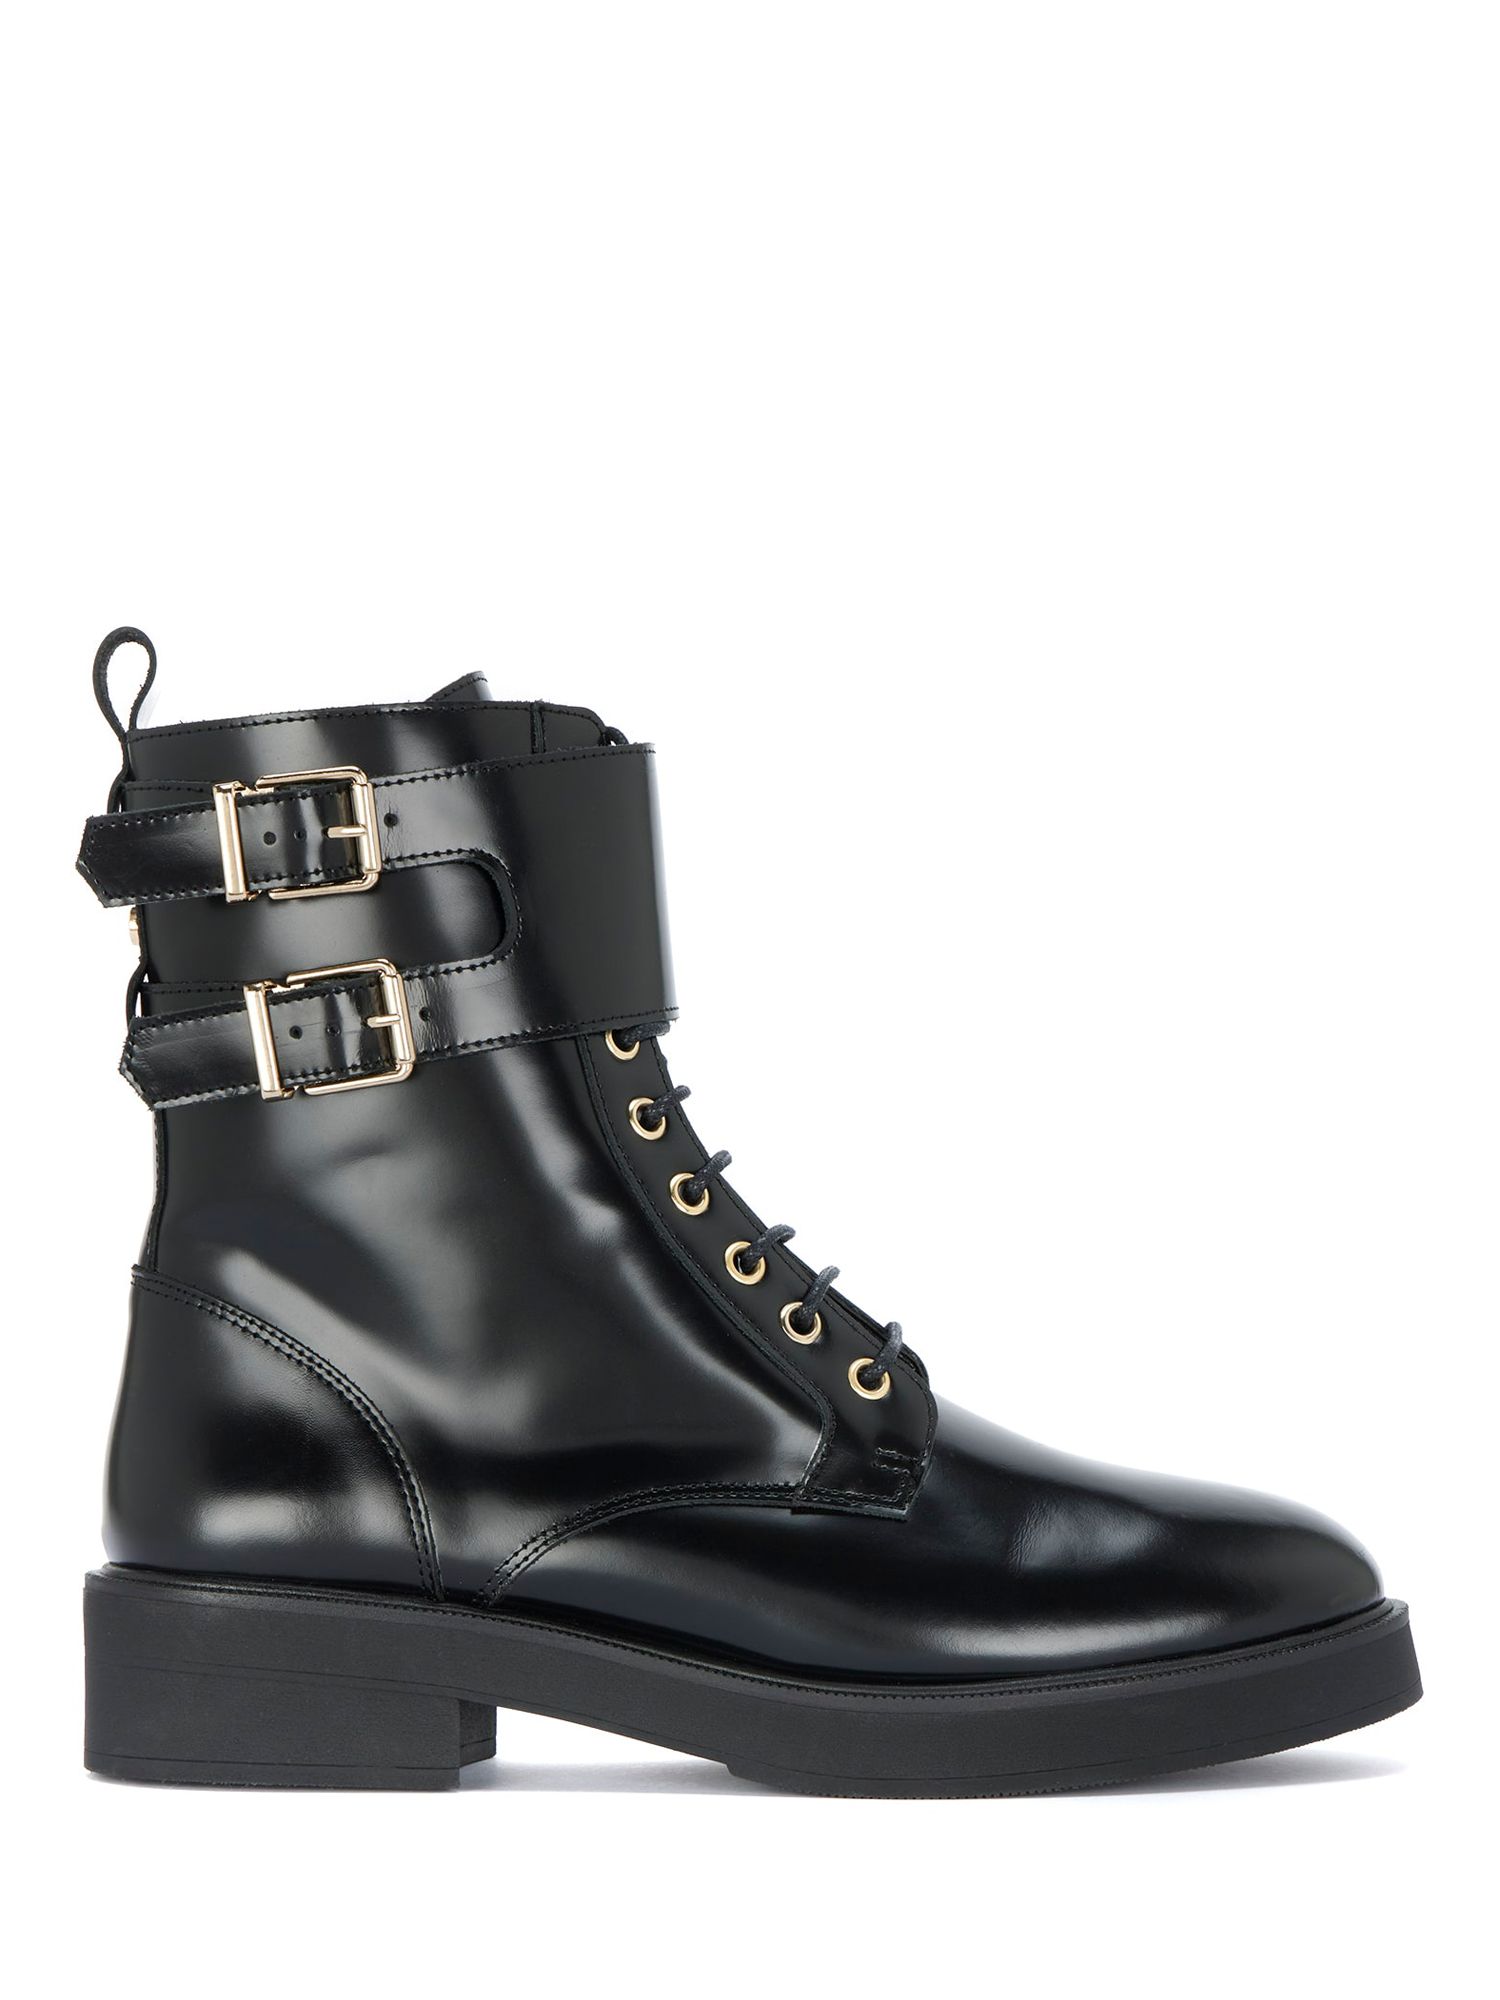 Mint Velvet Front Zip Leather Ankle Boots, Black Patent